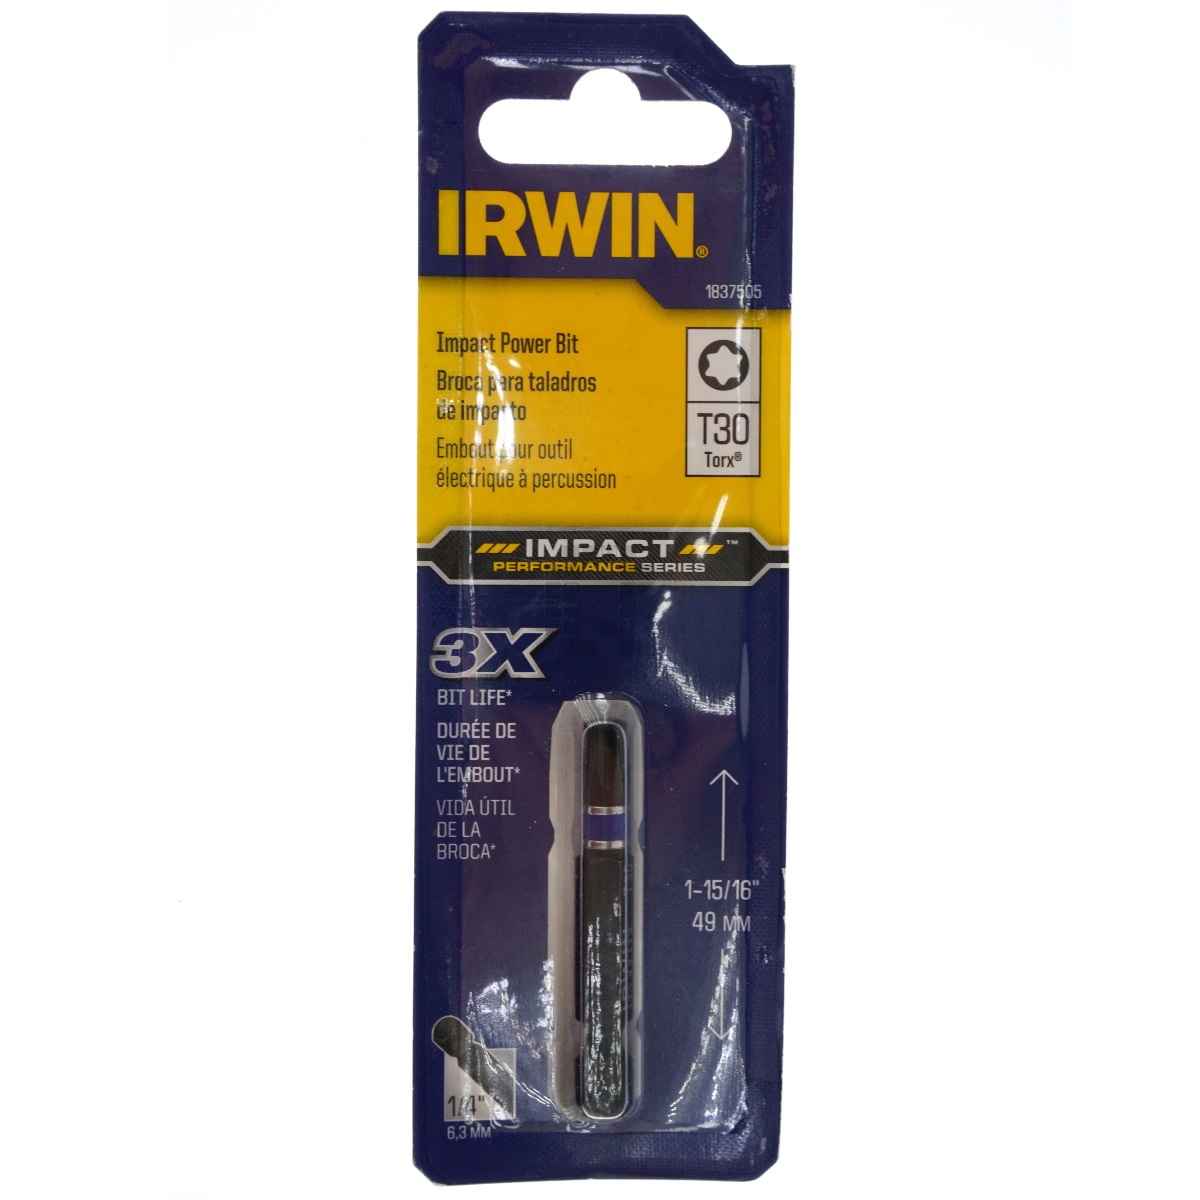 Irwin 1837505 T30 Torx Impact Performance Series Power Bit, 2" Length